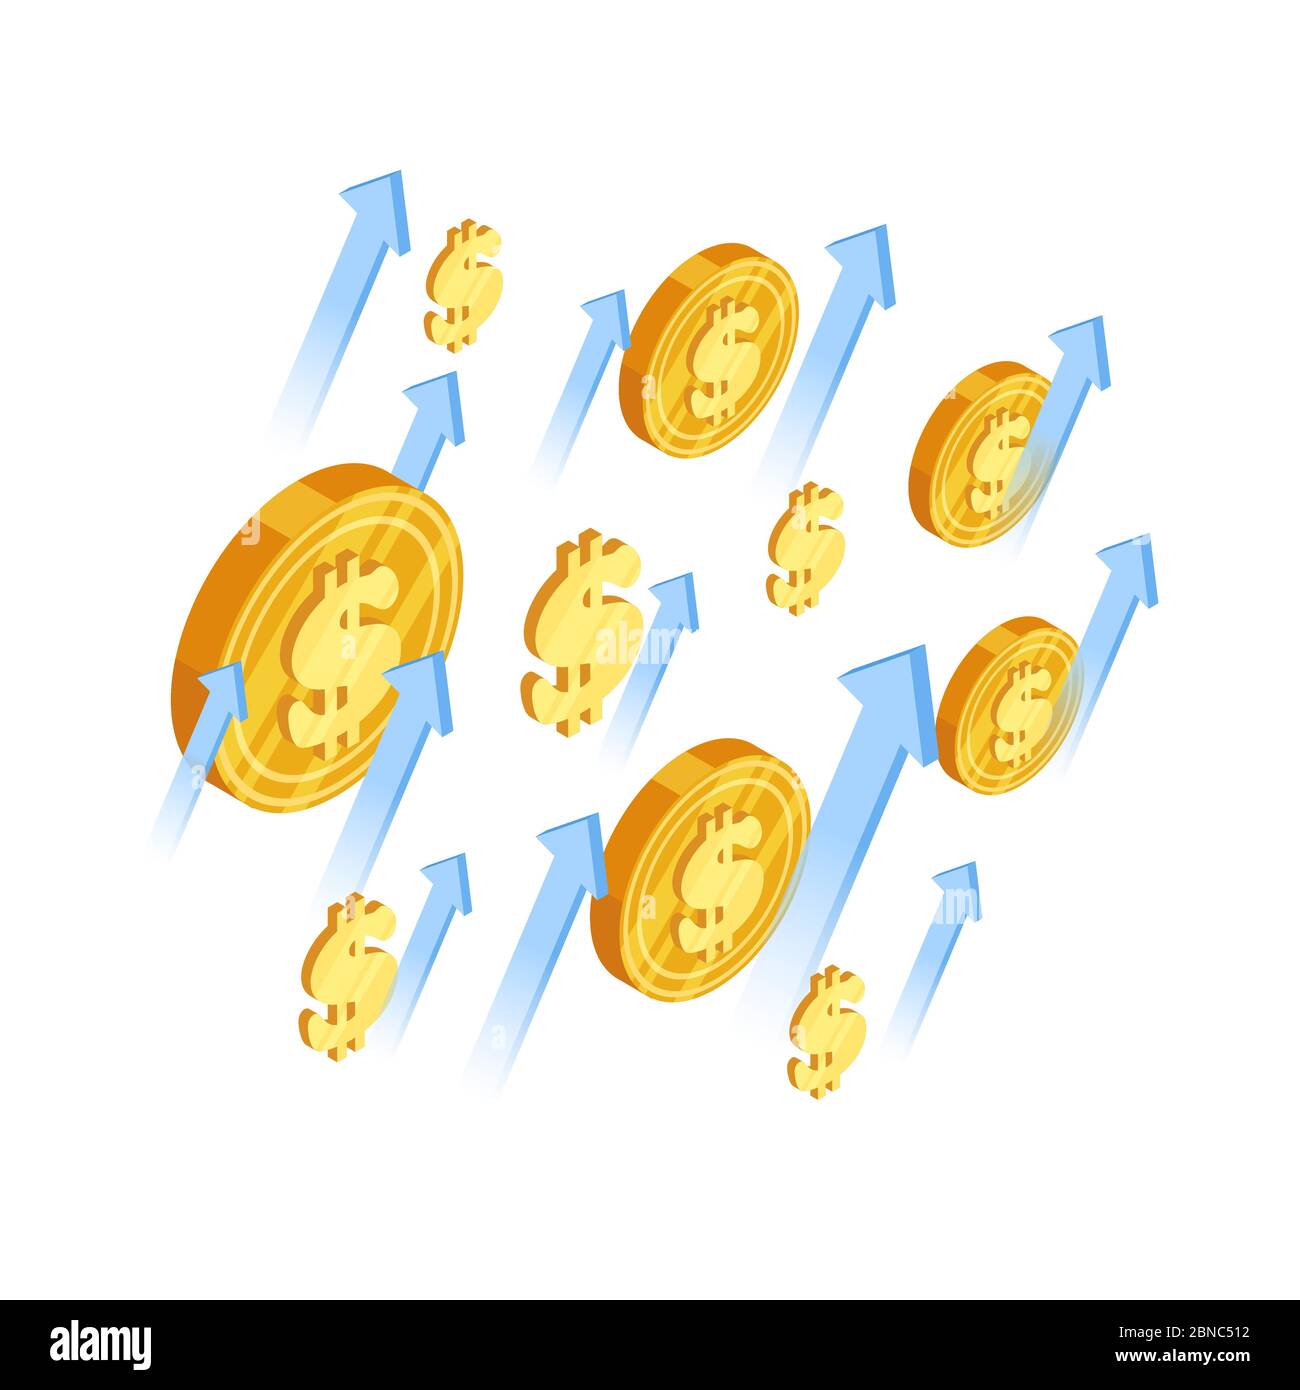 Growth dollar vector concept. Arrows and dollar coins isometric illustration. Dollar money, finance isometric coins Stock Vector